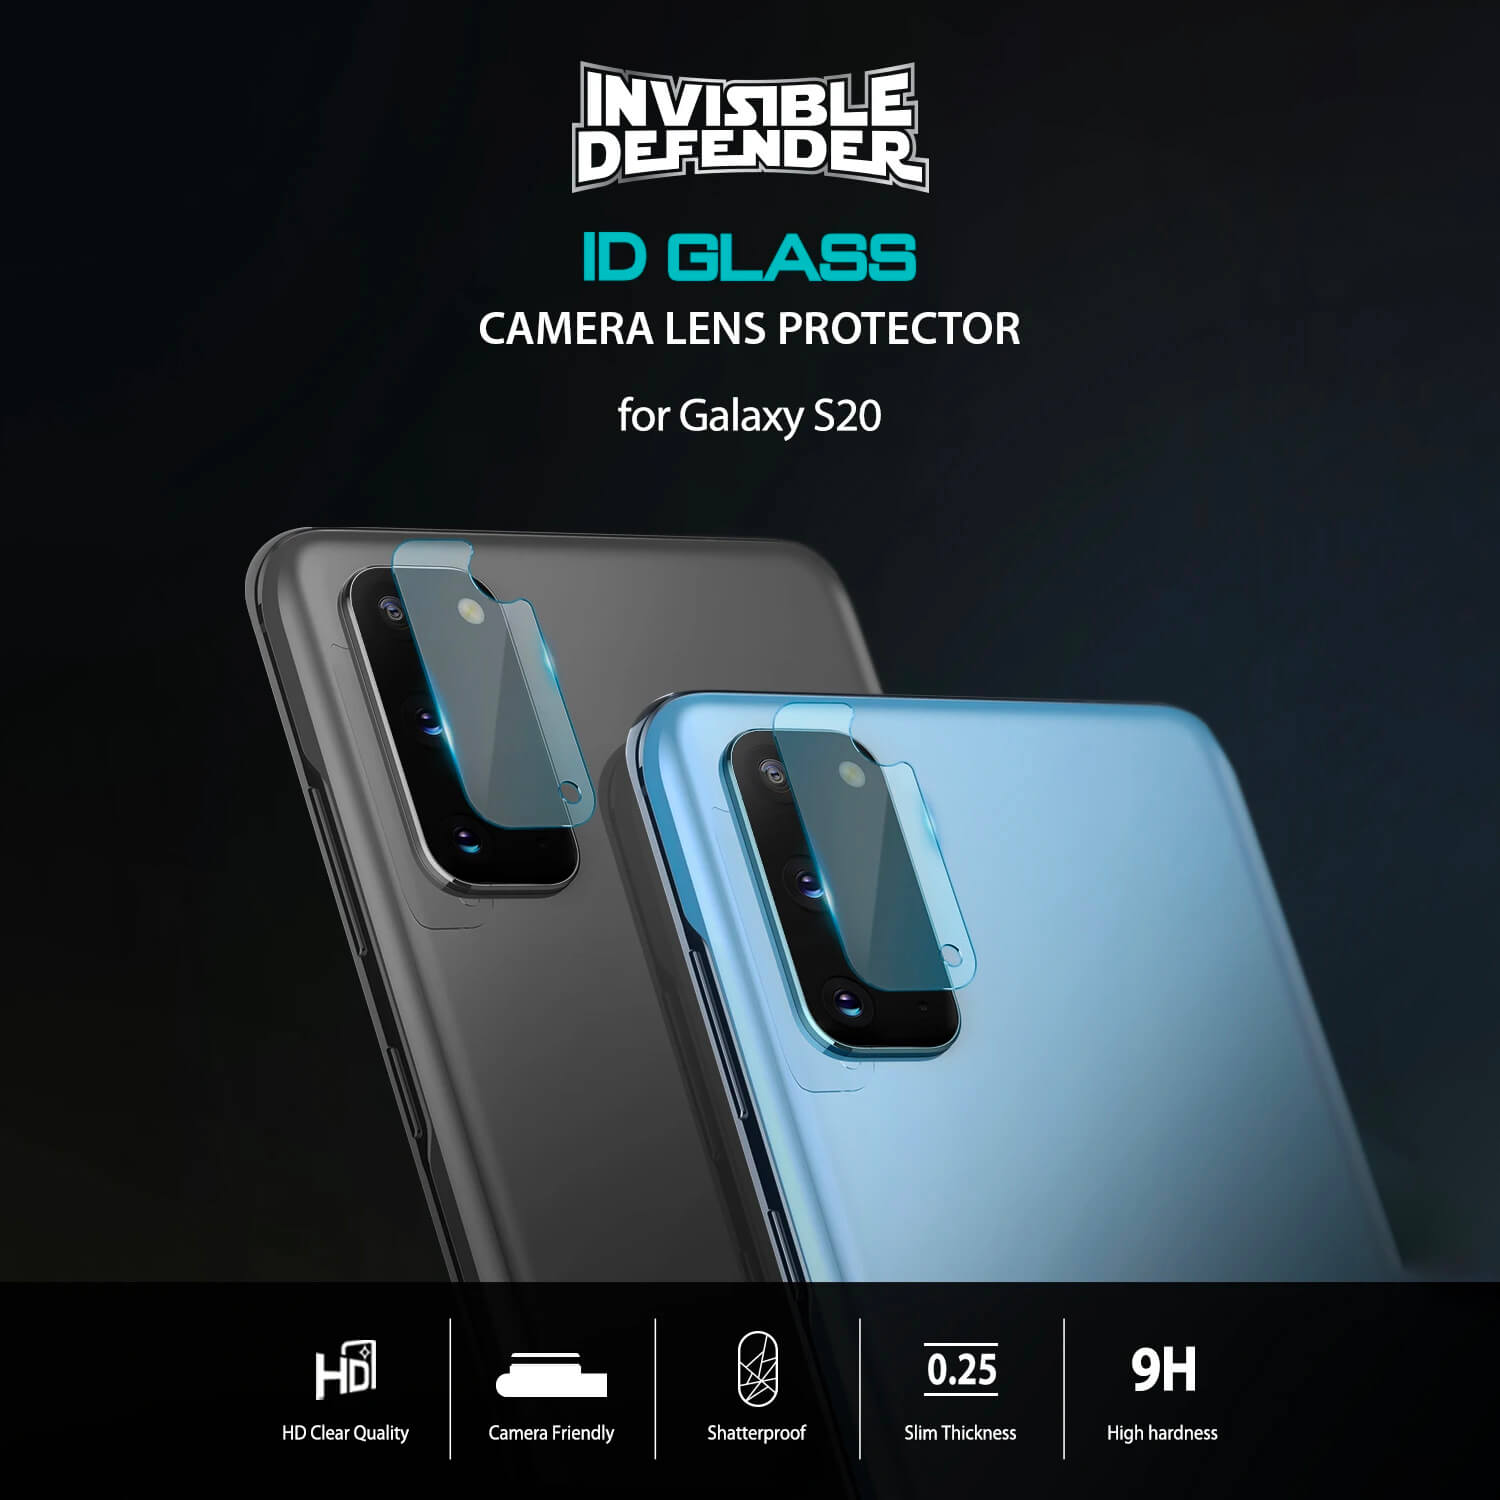 Ringke Samsung Galaxy S20 Camera Protector Invisible Defender Glass